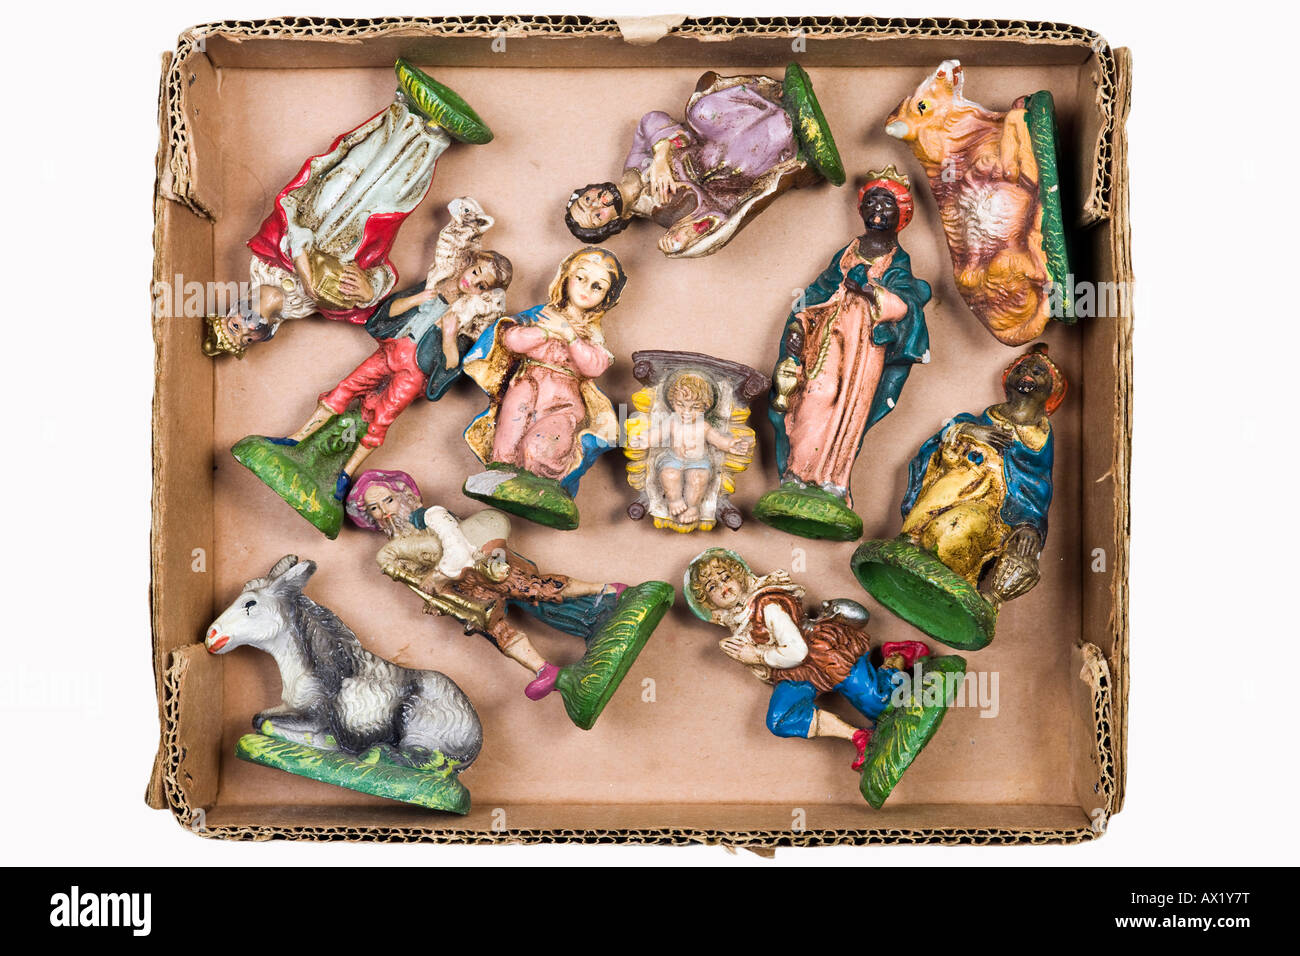 Packed crib figurines Stock Photo